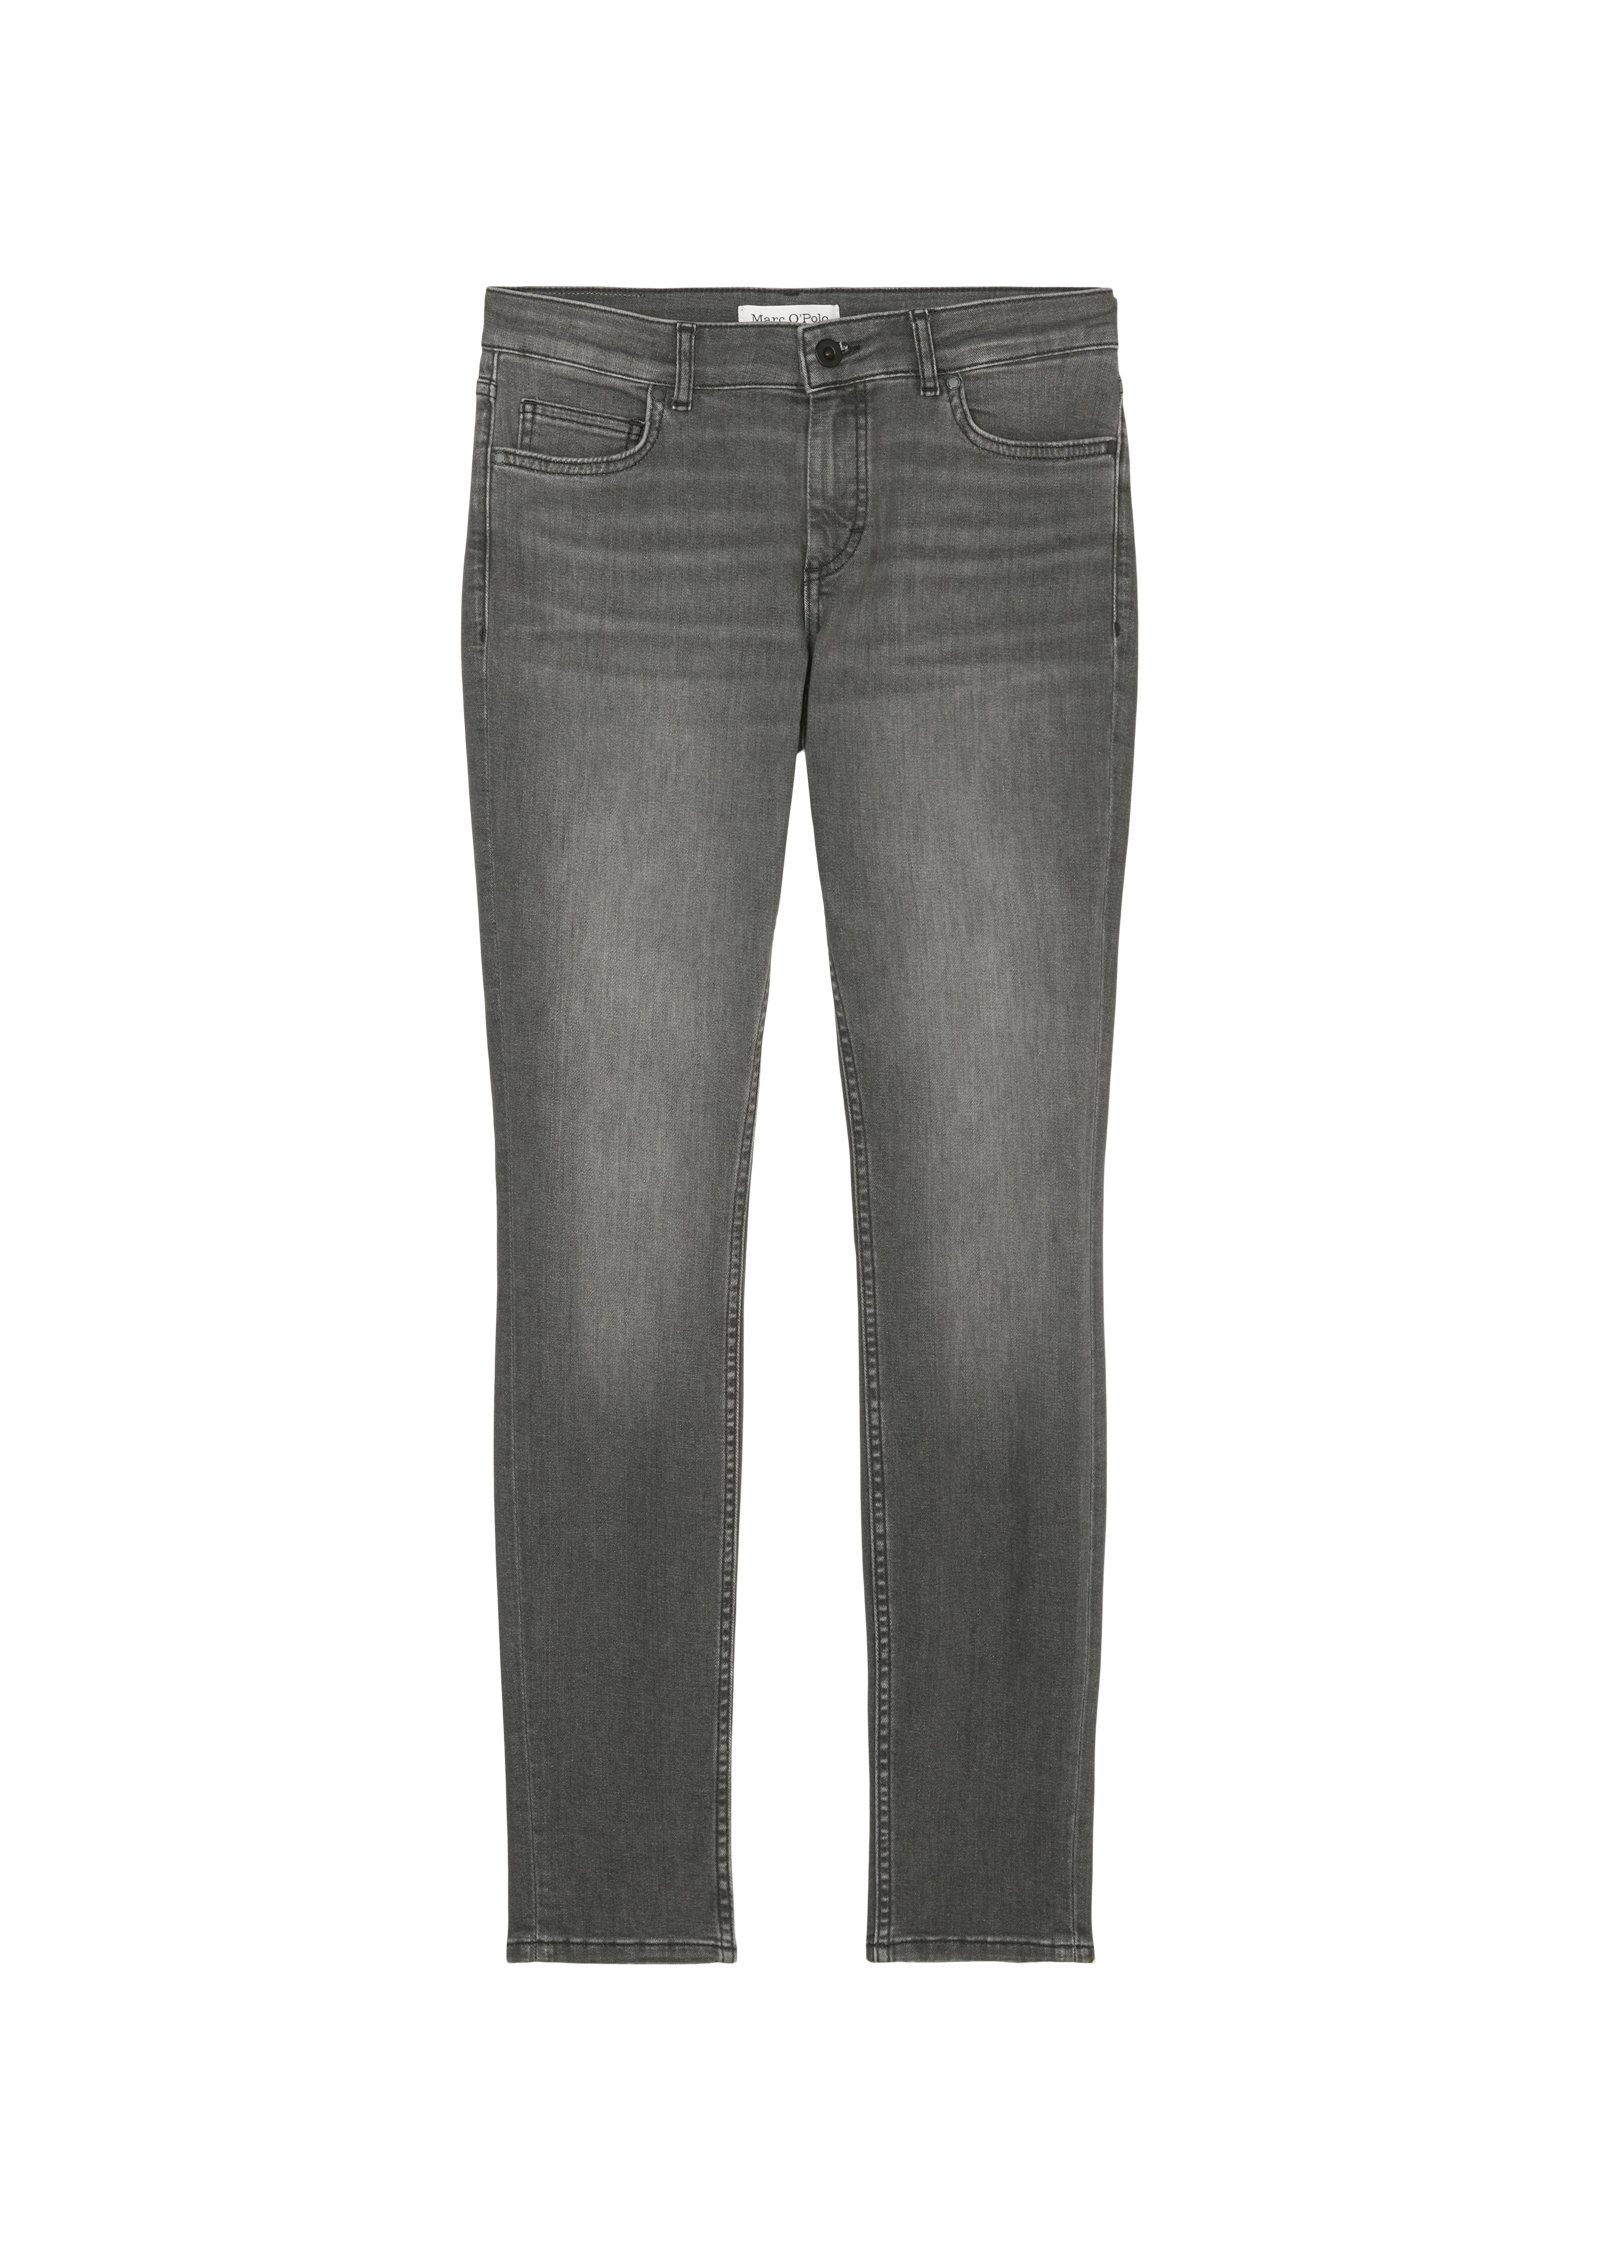 Marc le O'Polo regular 5-Pocket-Jeans Denim trouser, slim fit,